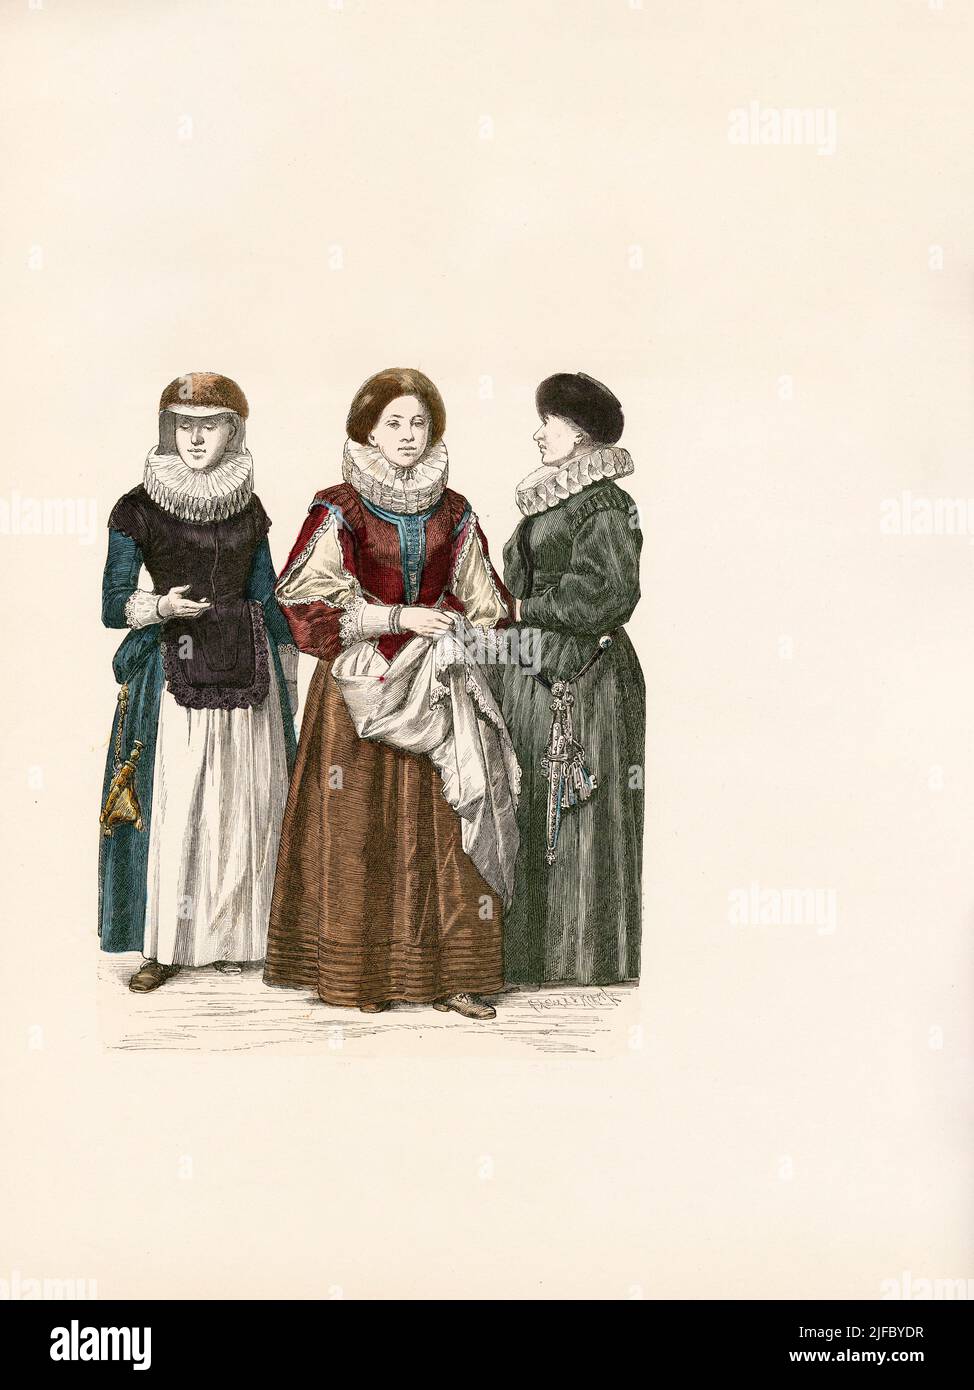 Three Women from Frankfurt on Main, Palatinate, Swabian, German mid-17th Century Fashion, Illustration, The History of Costume, Braun & Schneider, Munich, Germany, 1861-1880 Stock Photo